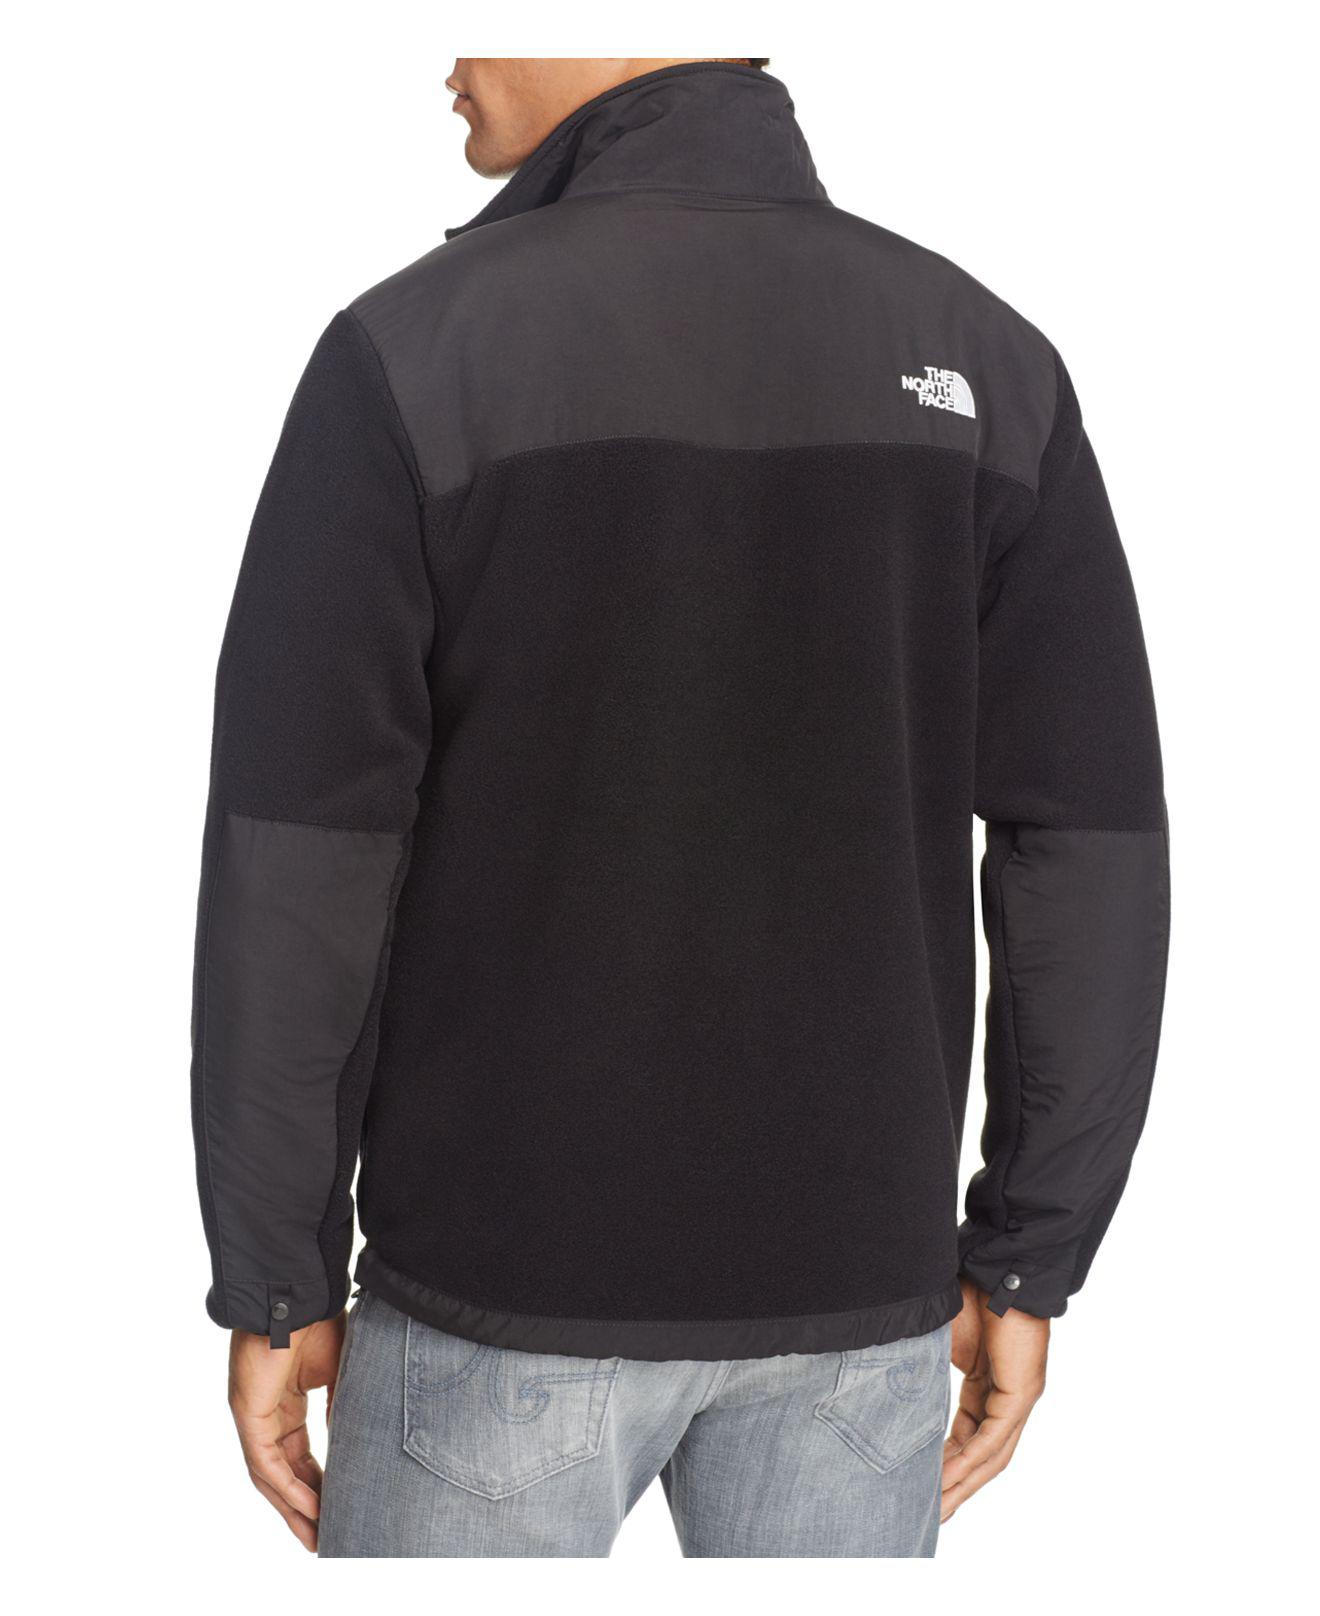 Lyst - The North Face Denali Zip Fleece Jacket in Black for Men